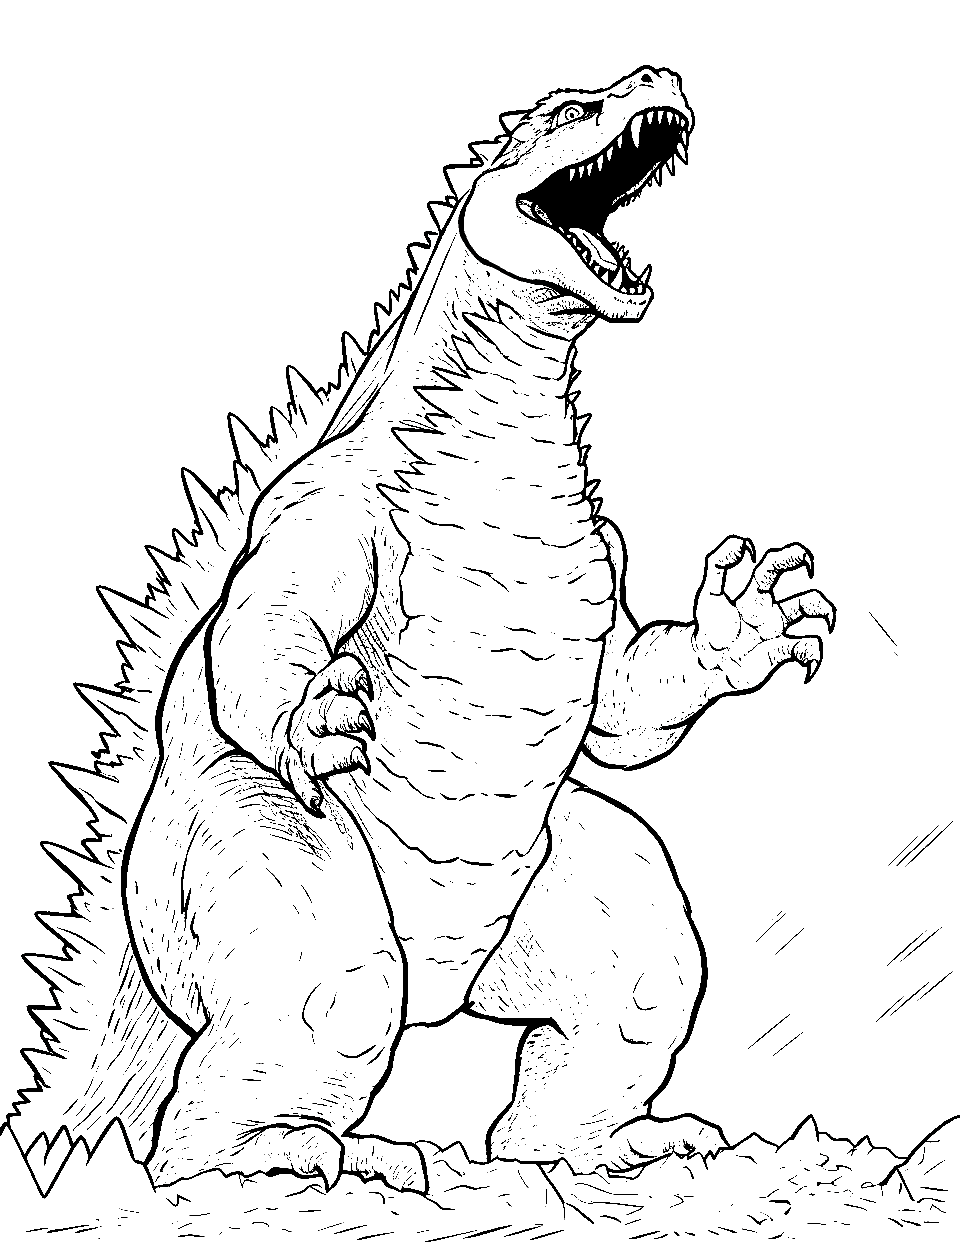 Legendary Godzilla Roar Coloring Page - Godzilla letting out a deafening roar.